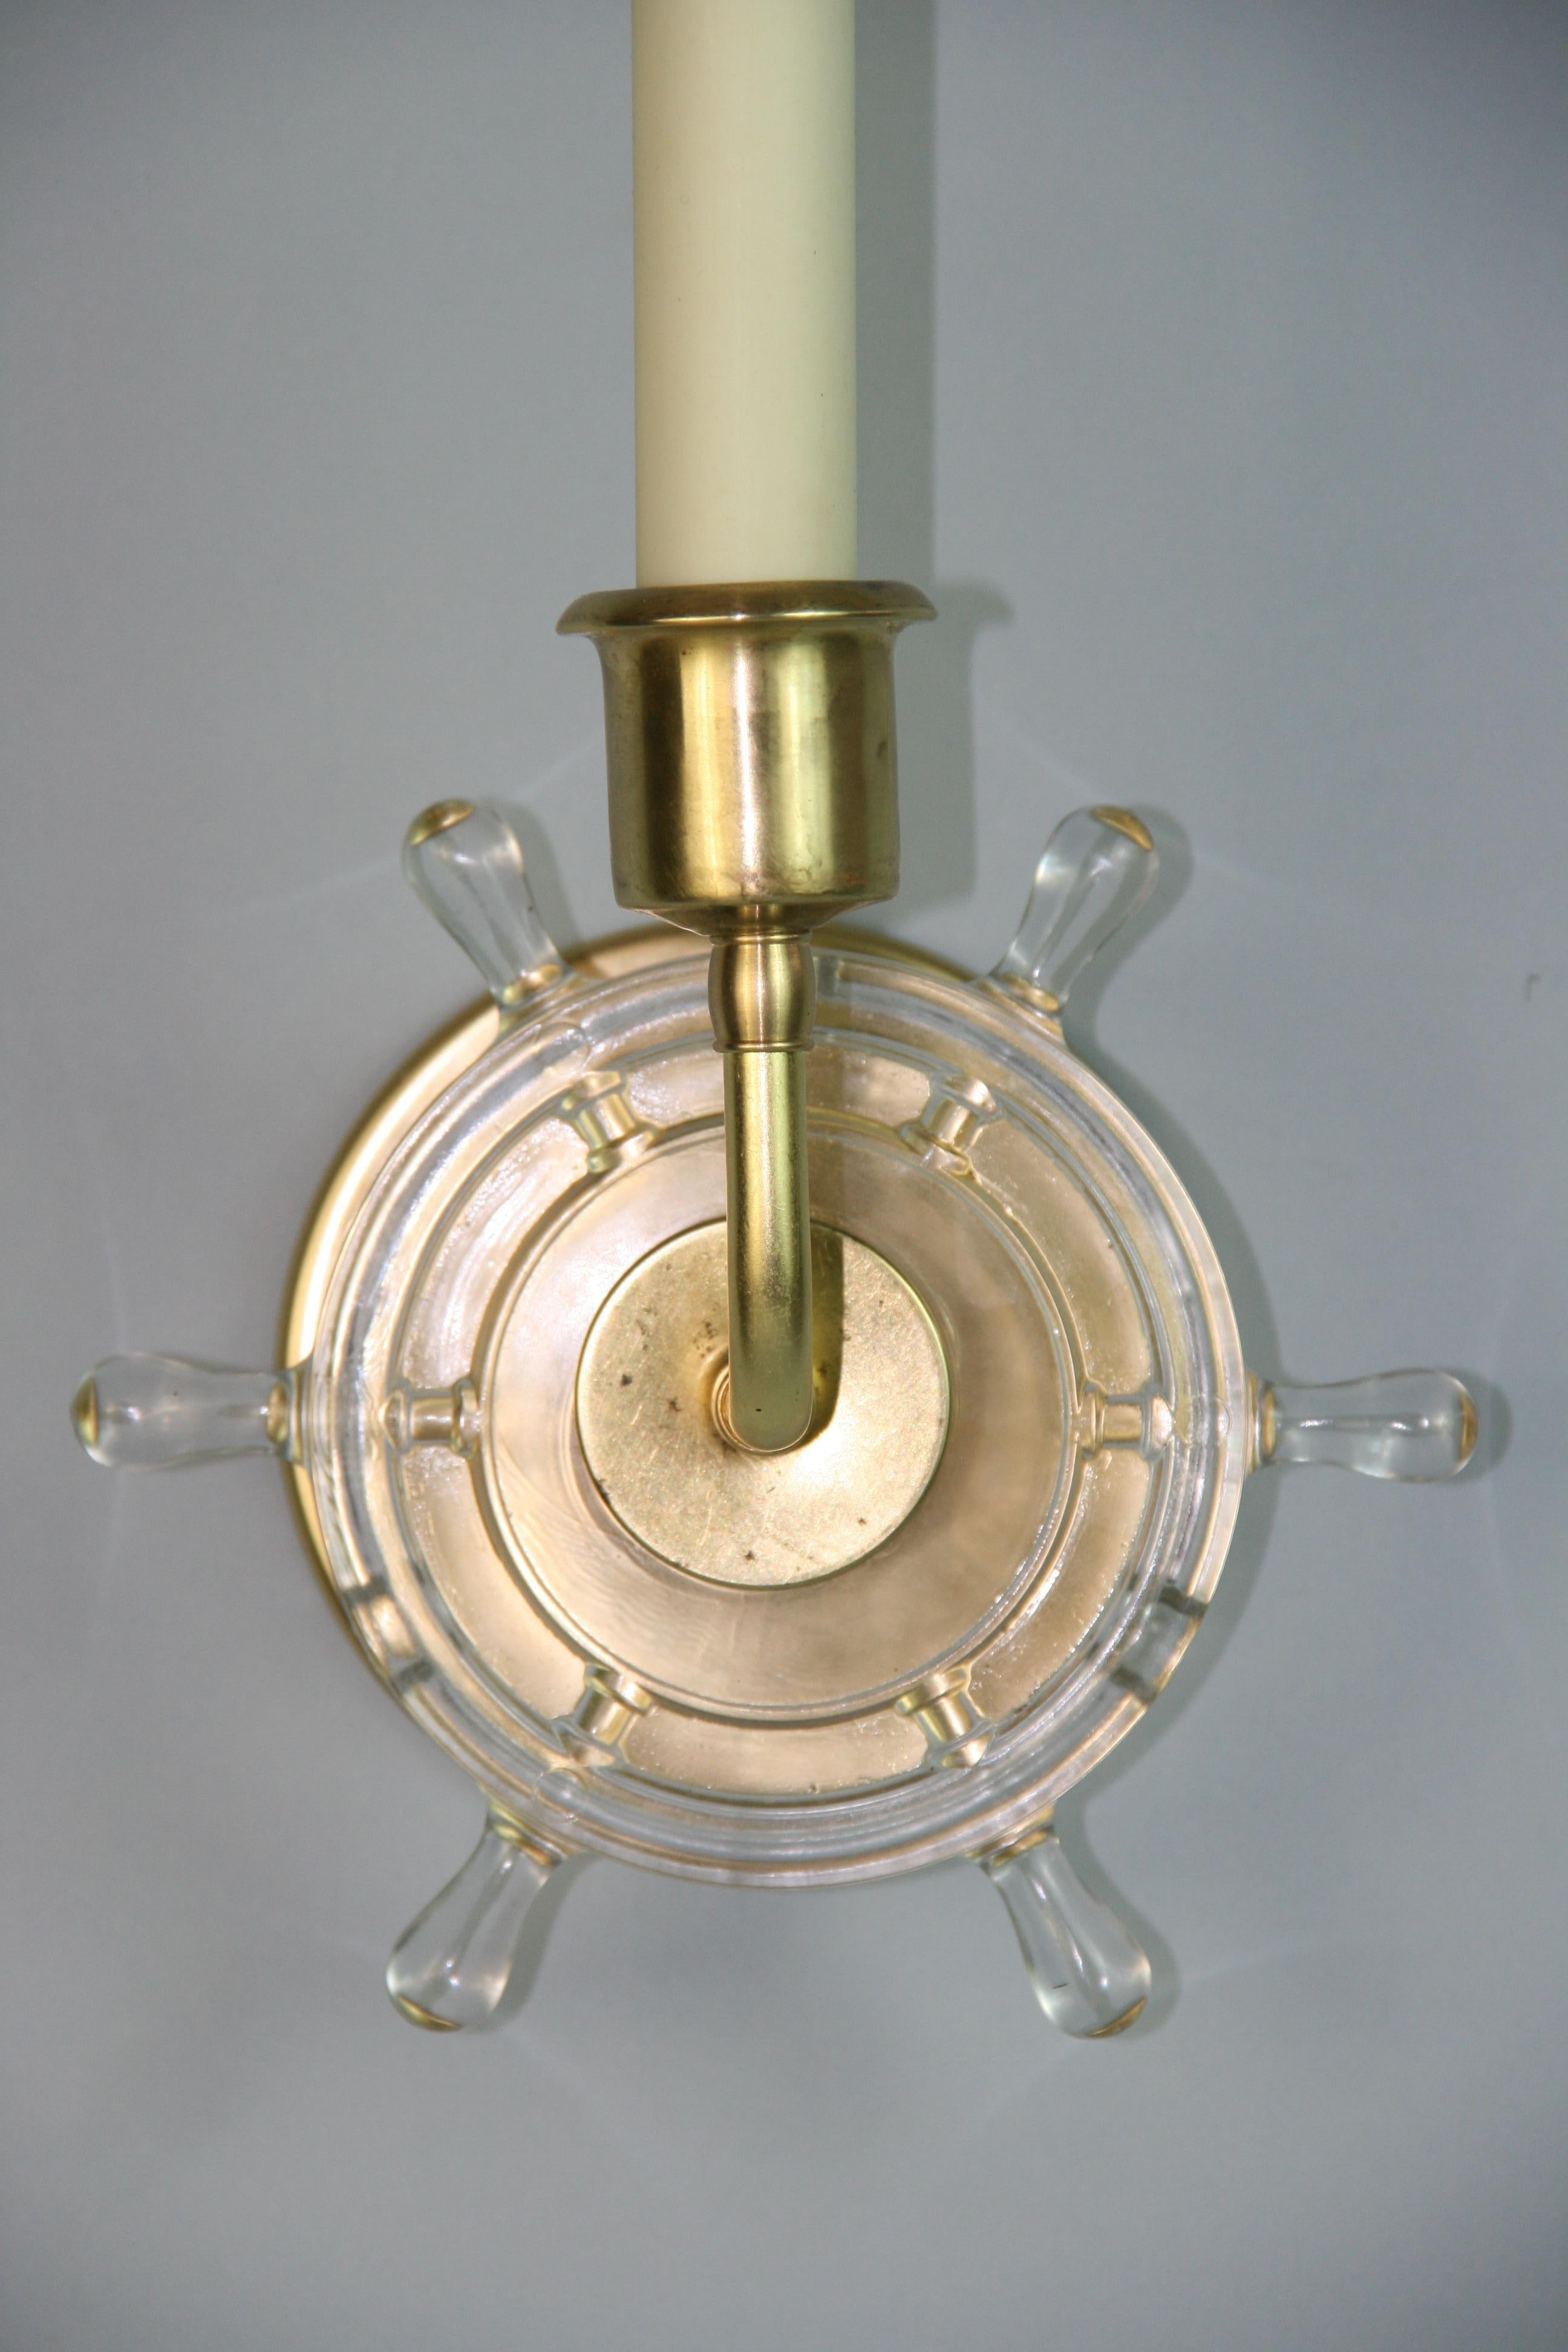 1605 pair of ships wheel nautical sconces
Takes one 60 watt candelabra base bulb.
.